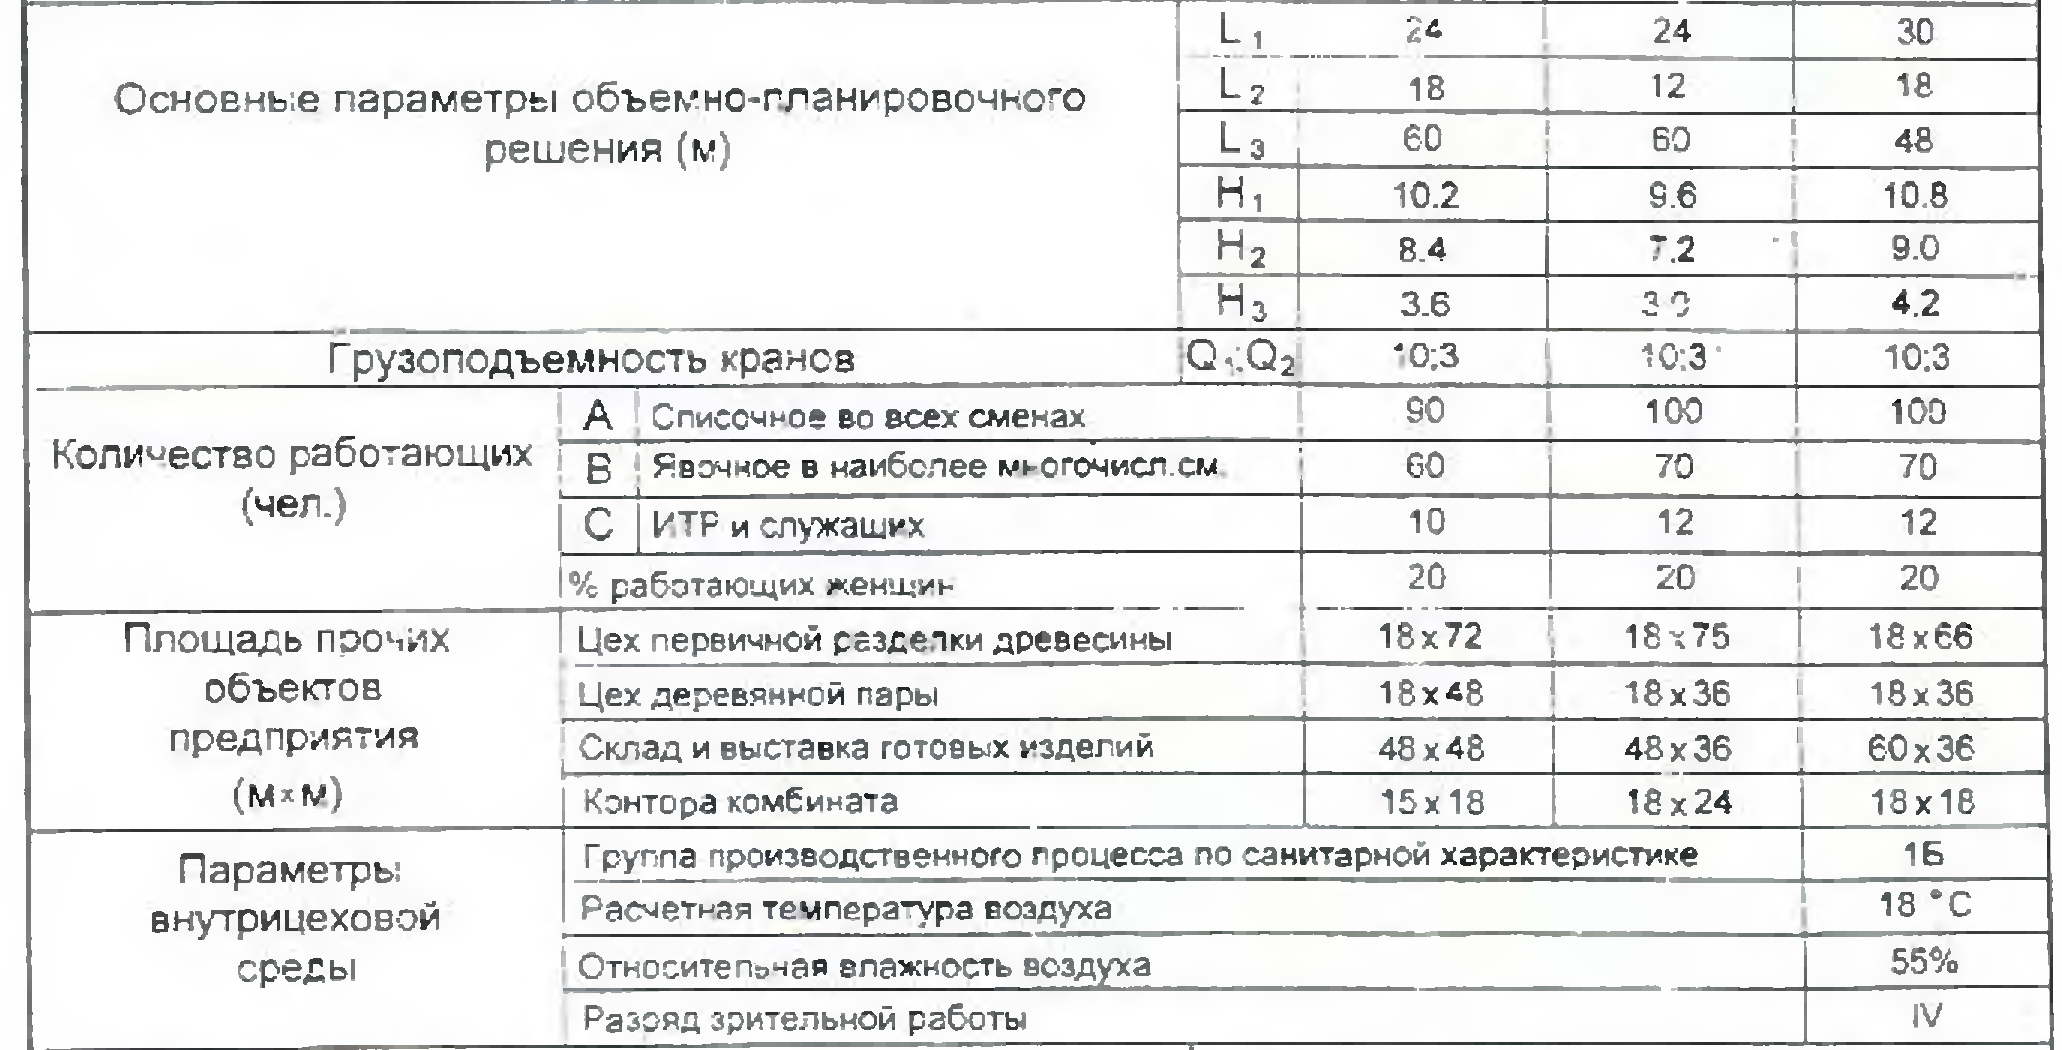 Iii. диагностико-контролирующий блок - student2.ru